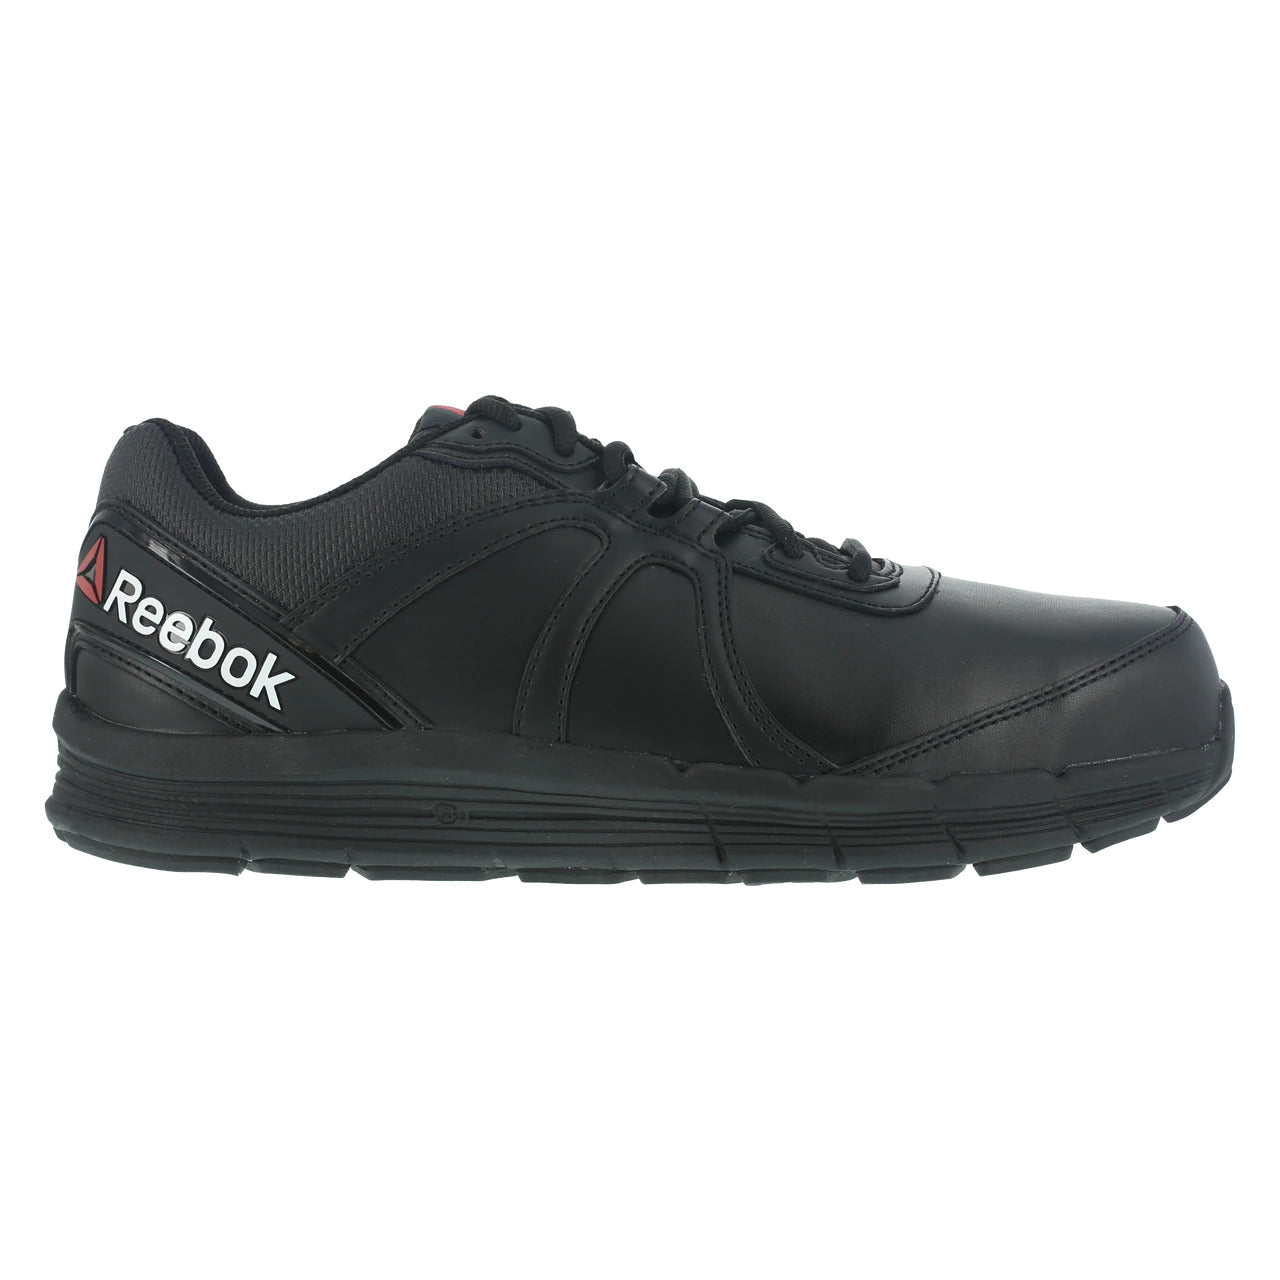 RB3501 GUIDE WORK - Men's Performance Cross Trainer Steel Toe Sneaker (Black)